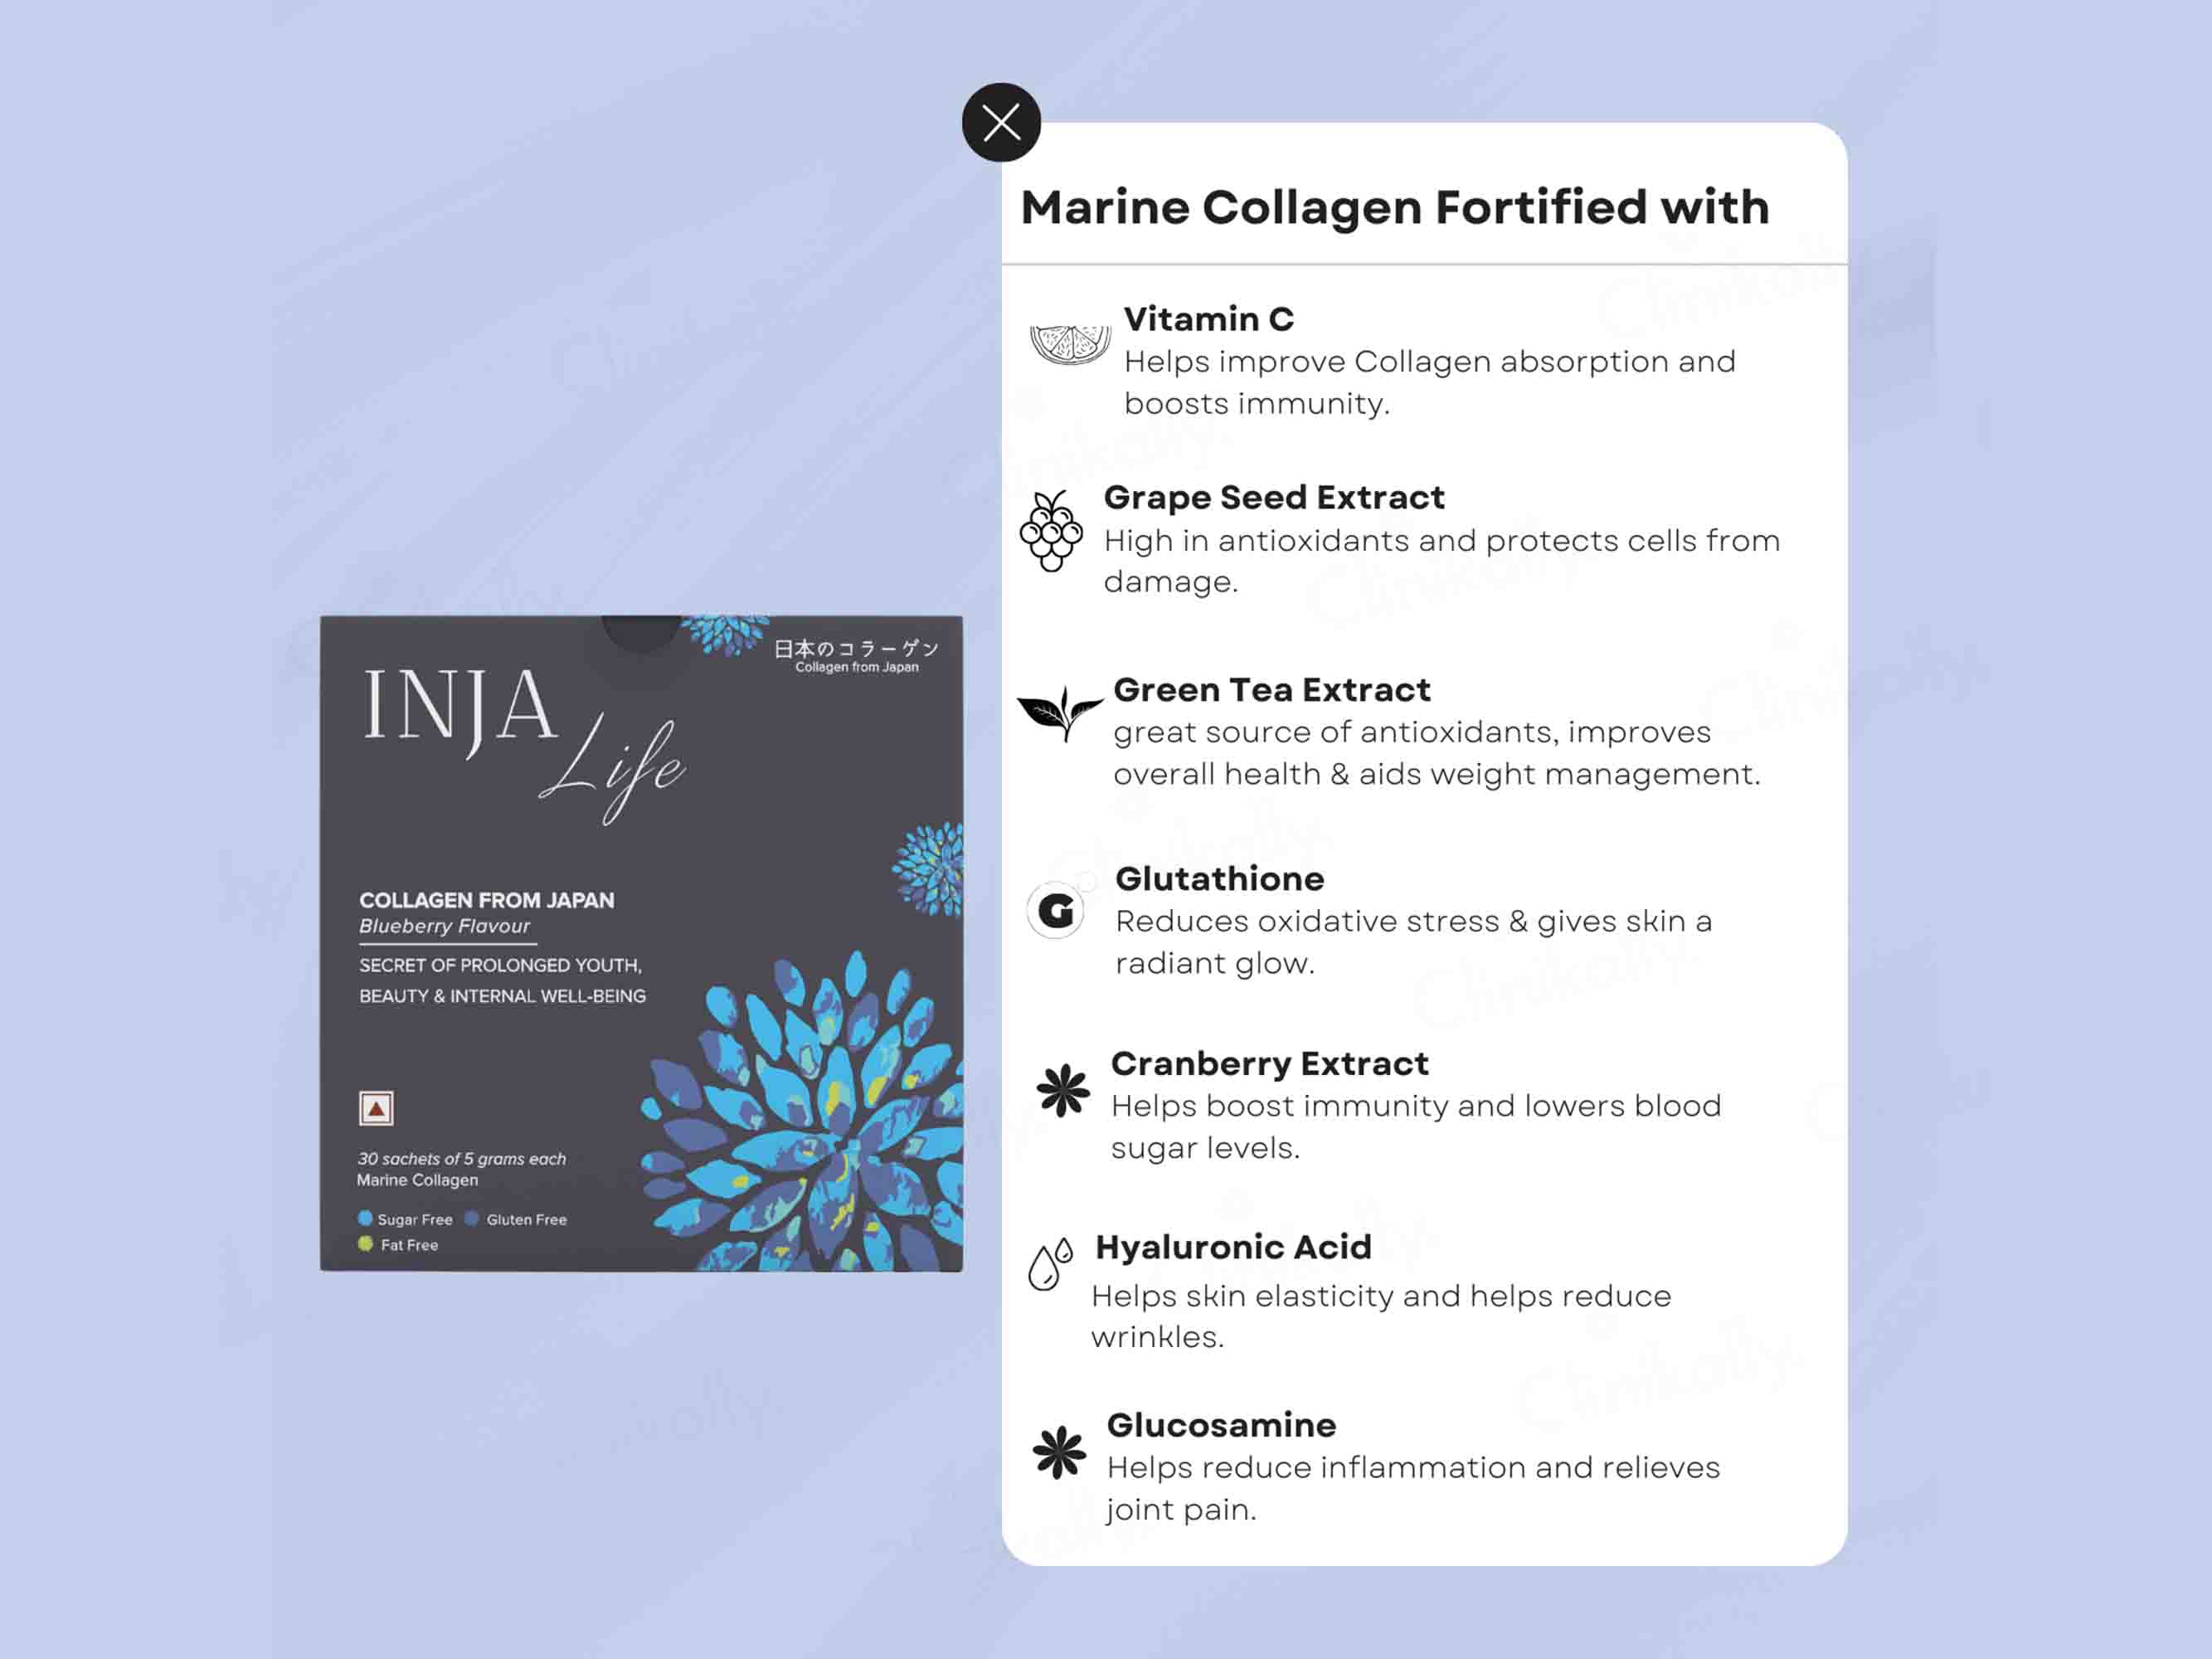 INJA Life Collagen - Blueberry - Clinikally